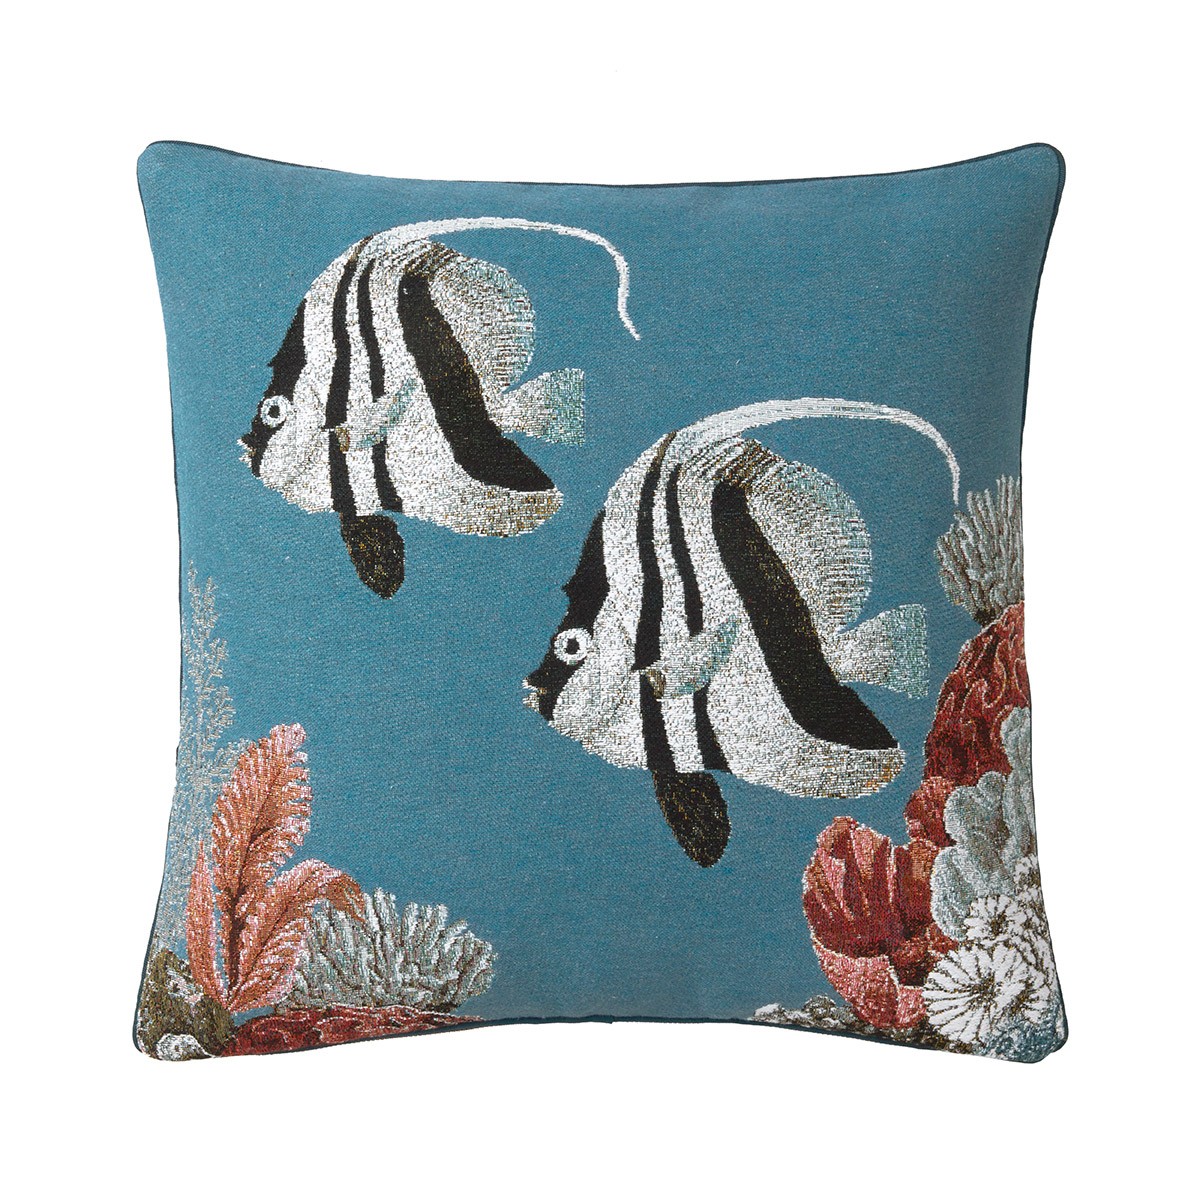 Mahe Decorative Pillow by Iosis Decorative Pillow 18x18 - Ocean